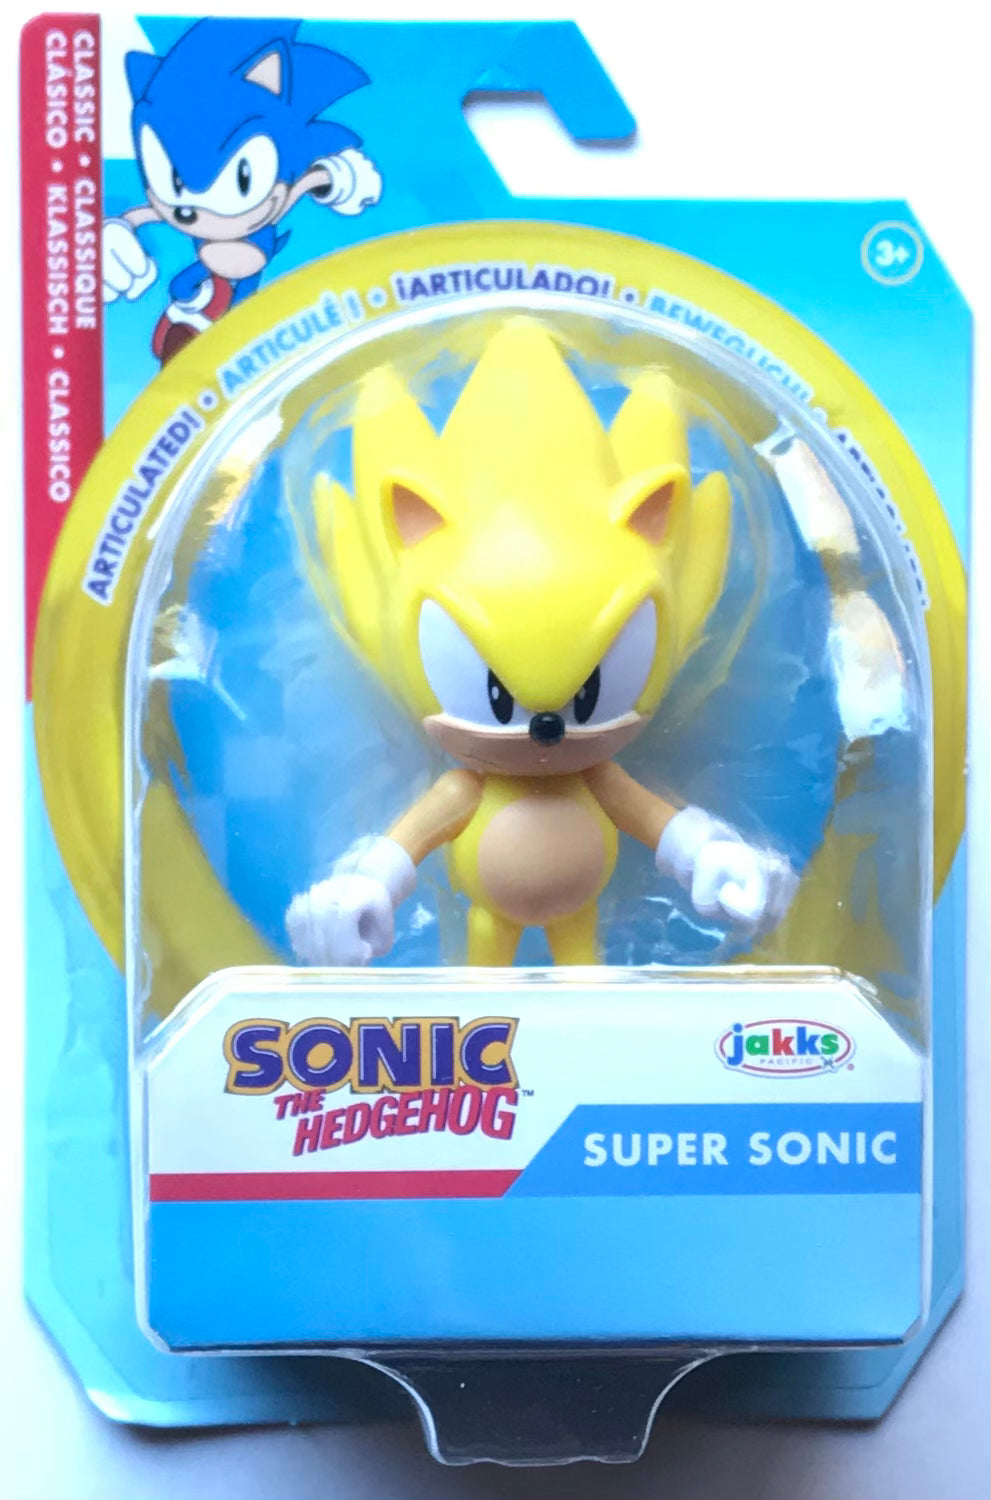 Super Sonic 2.5-inch Articulated Figure - JAKKS Pacific, Inc.